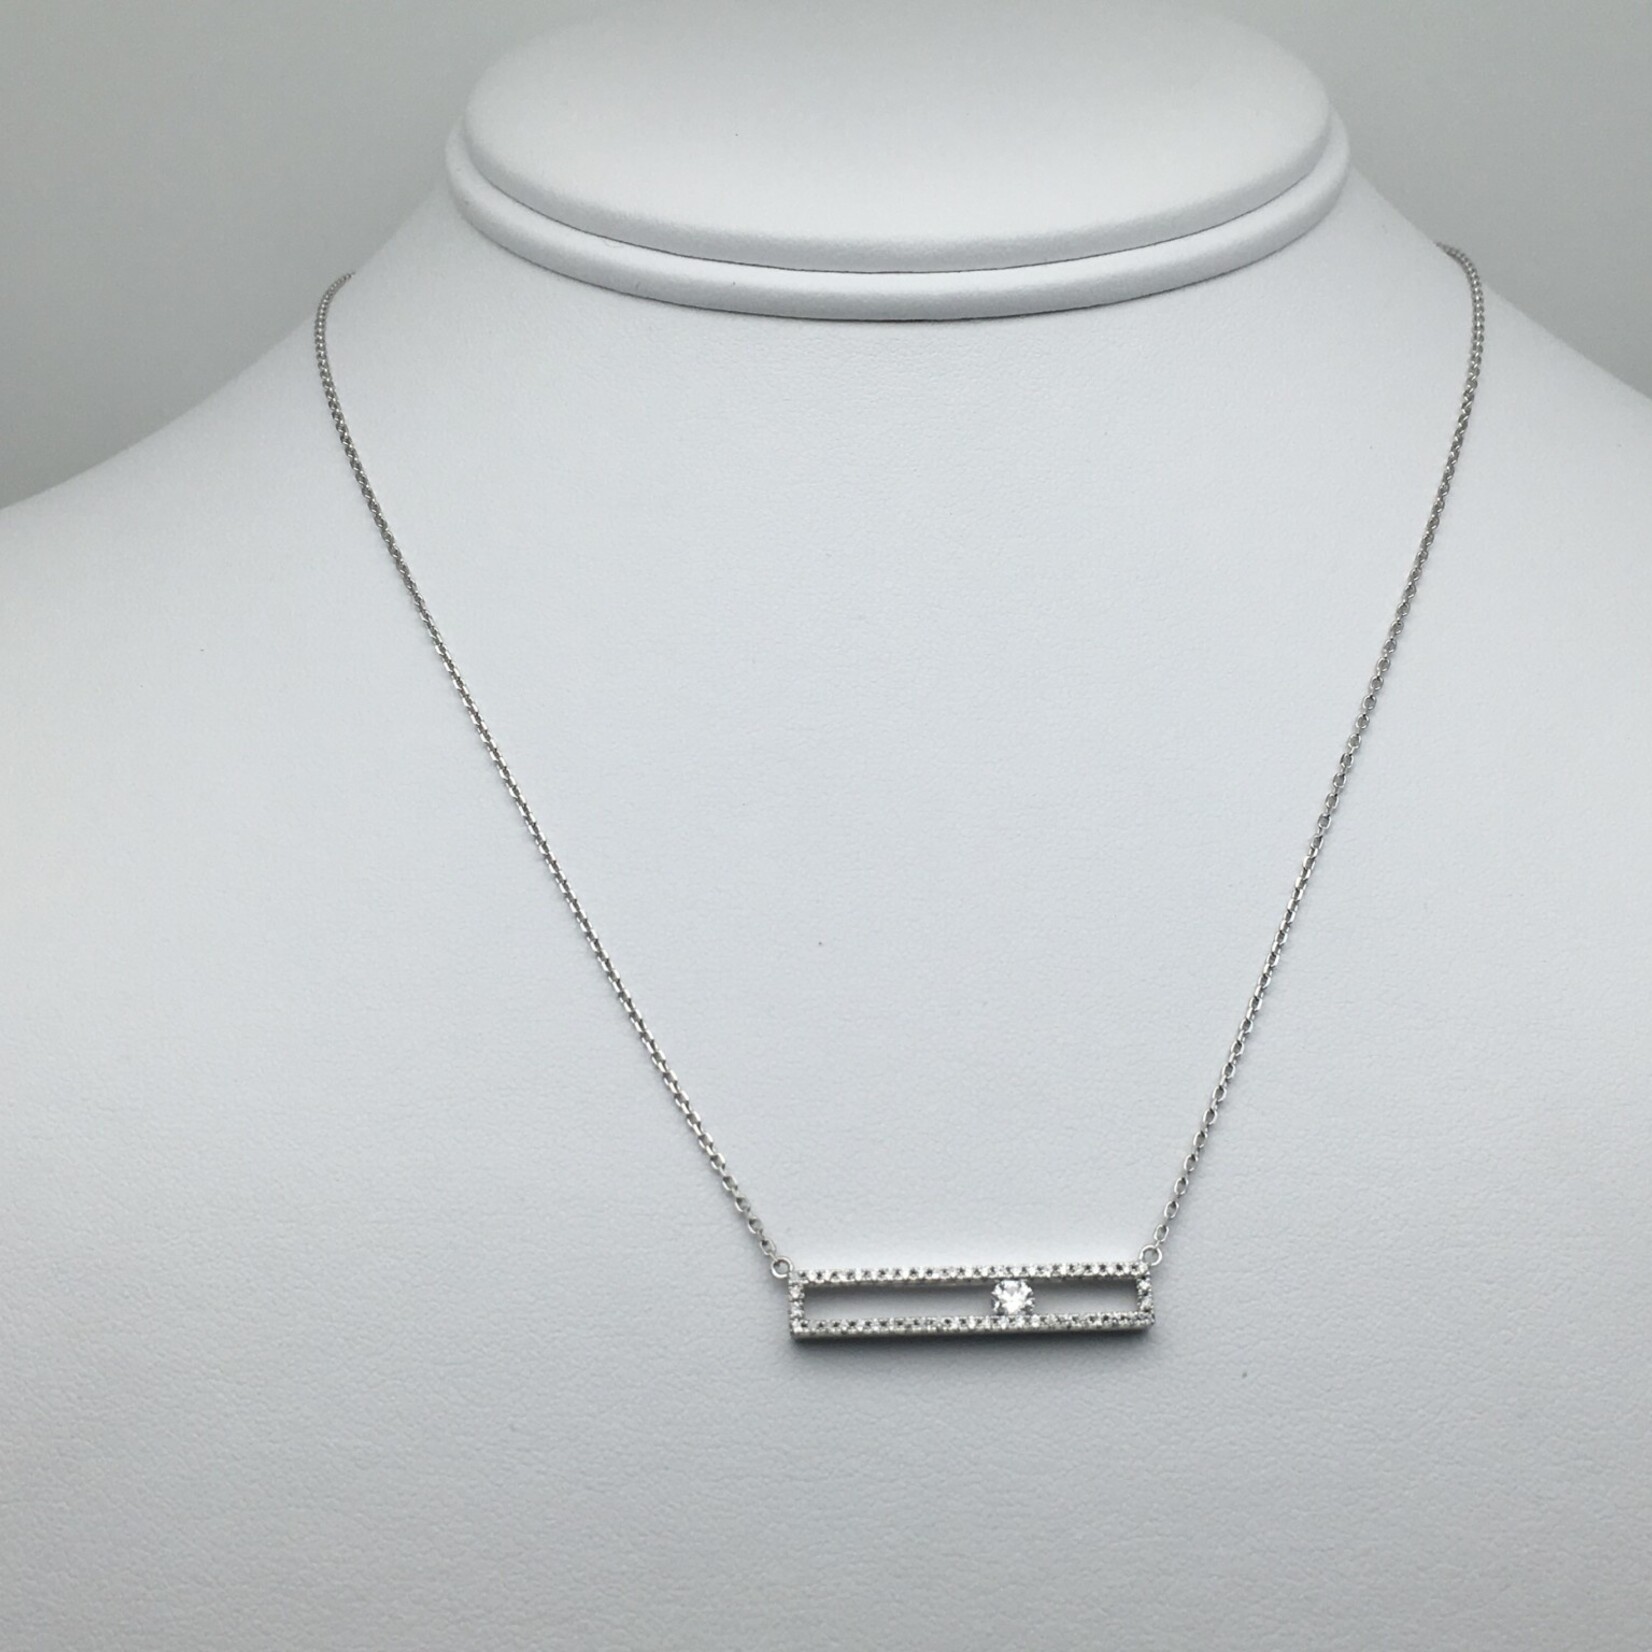 Franklin Jewelers 14kt W Diamond slider bar pendant necklace 0.25cttw